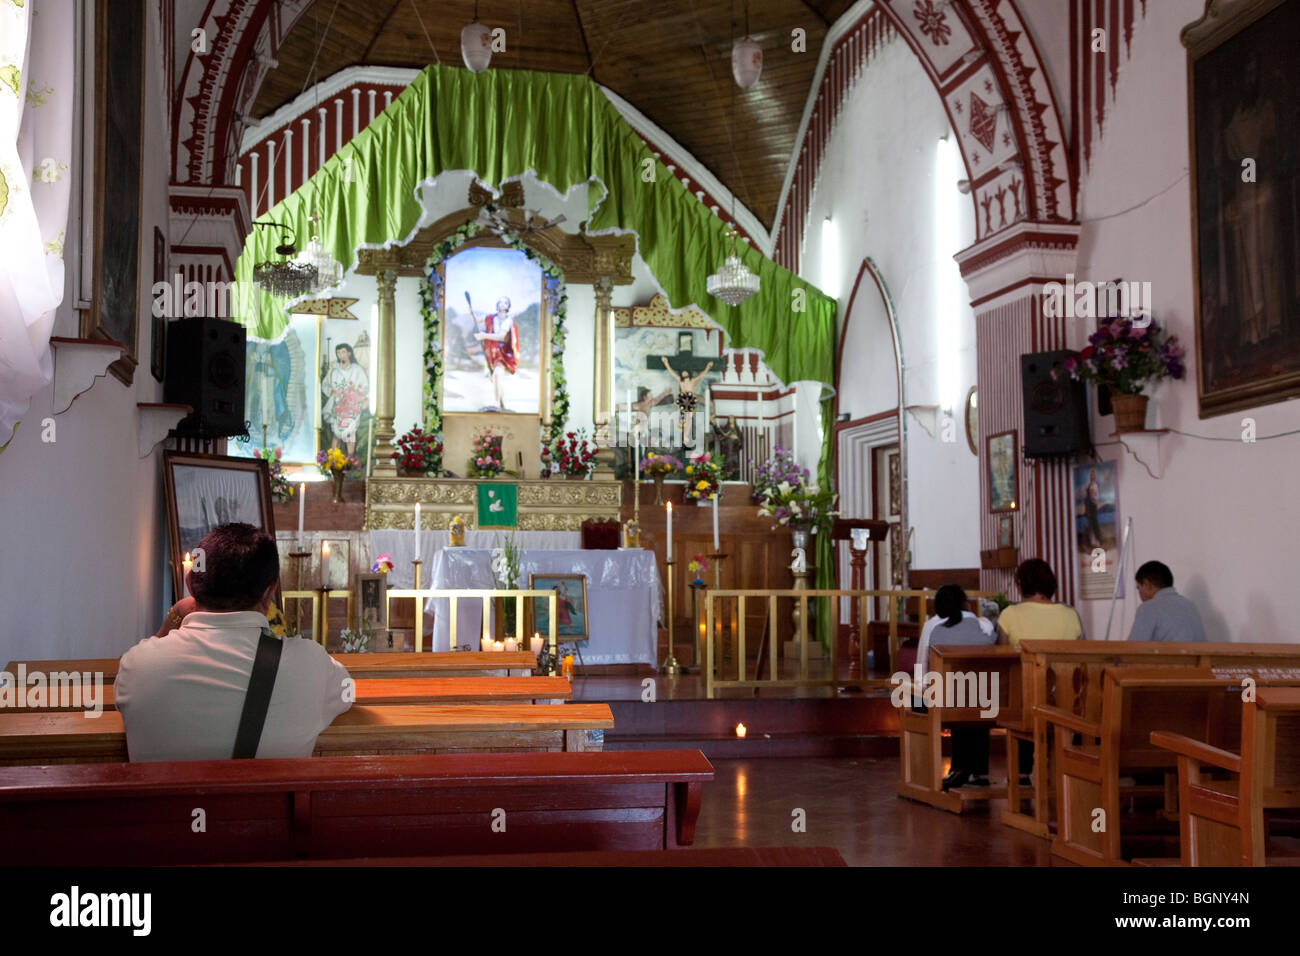 Iglesia del cerrito hi-res stock photography and images - Alamy